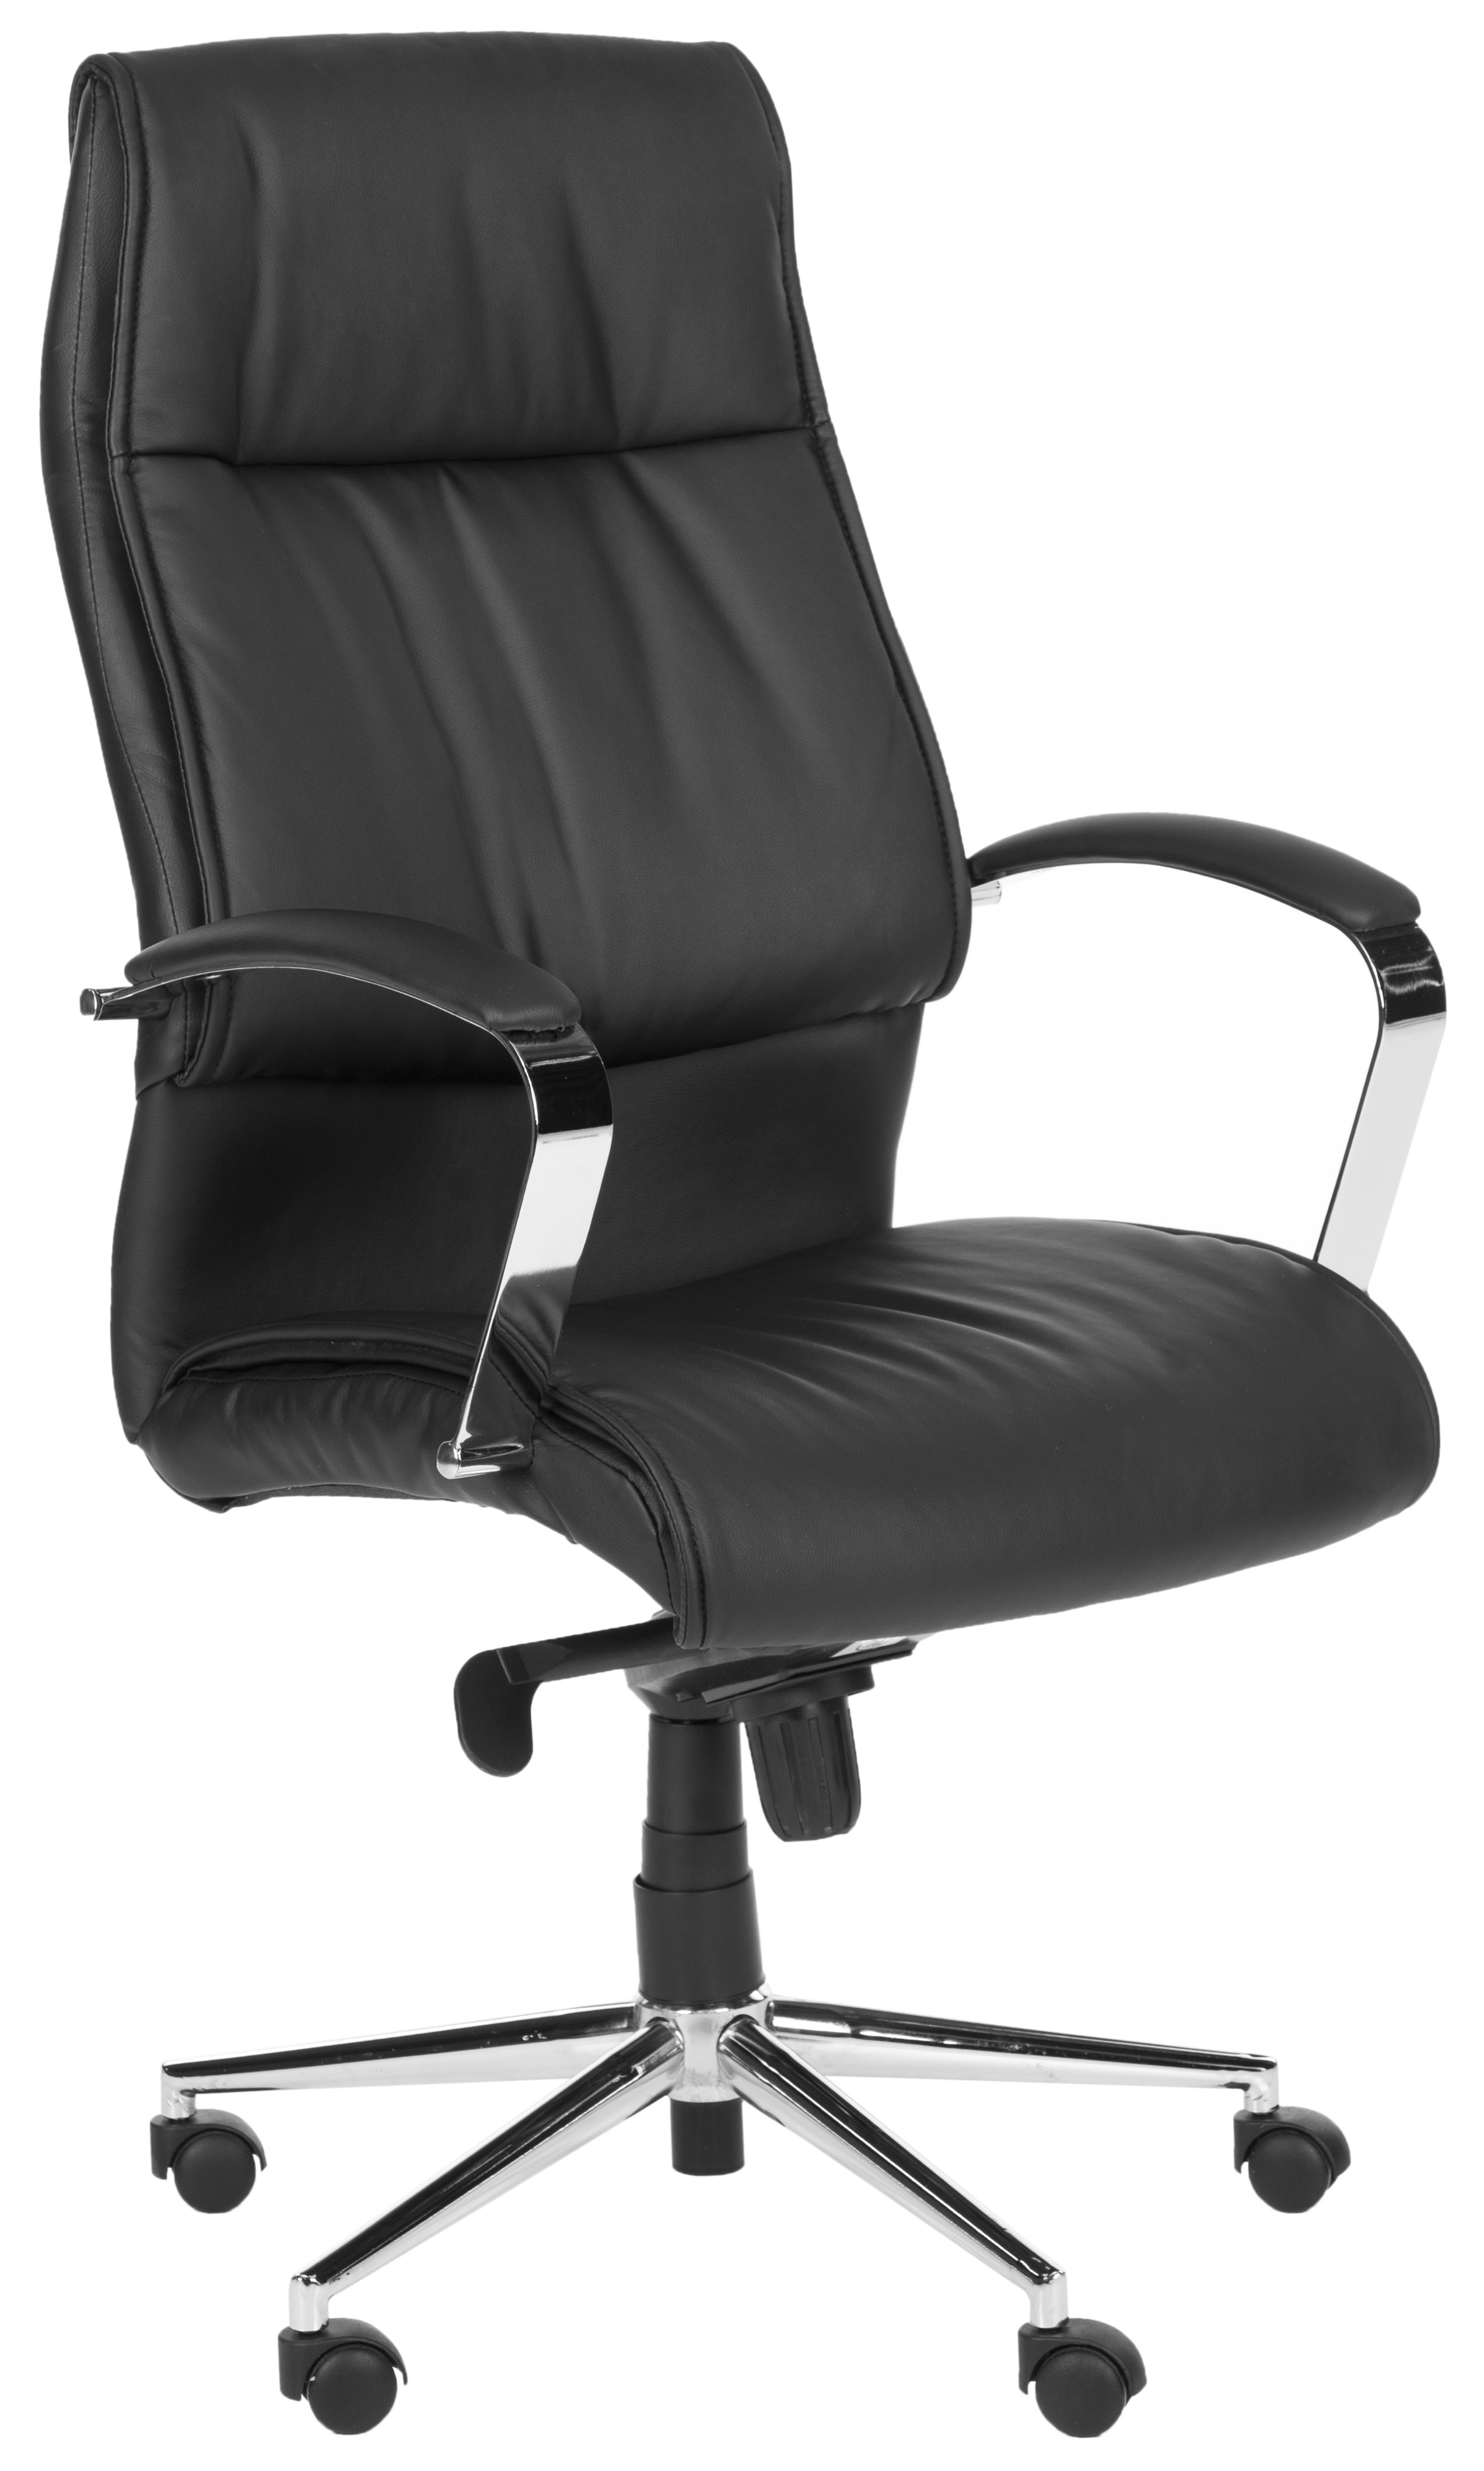 Fernando Desk Chair - Black/Silver - Safavieh - Image 0